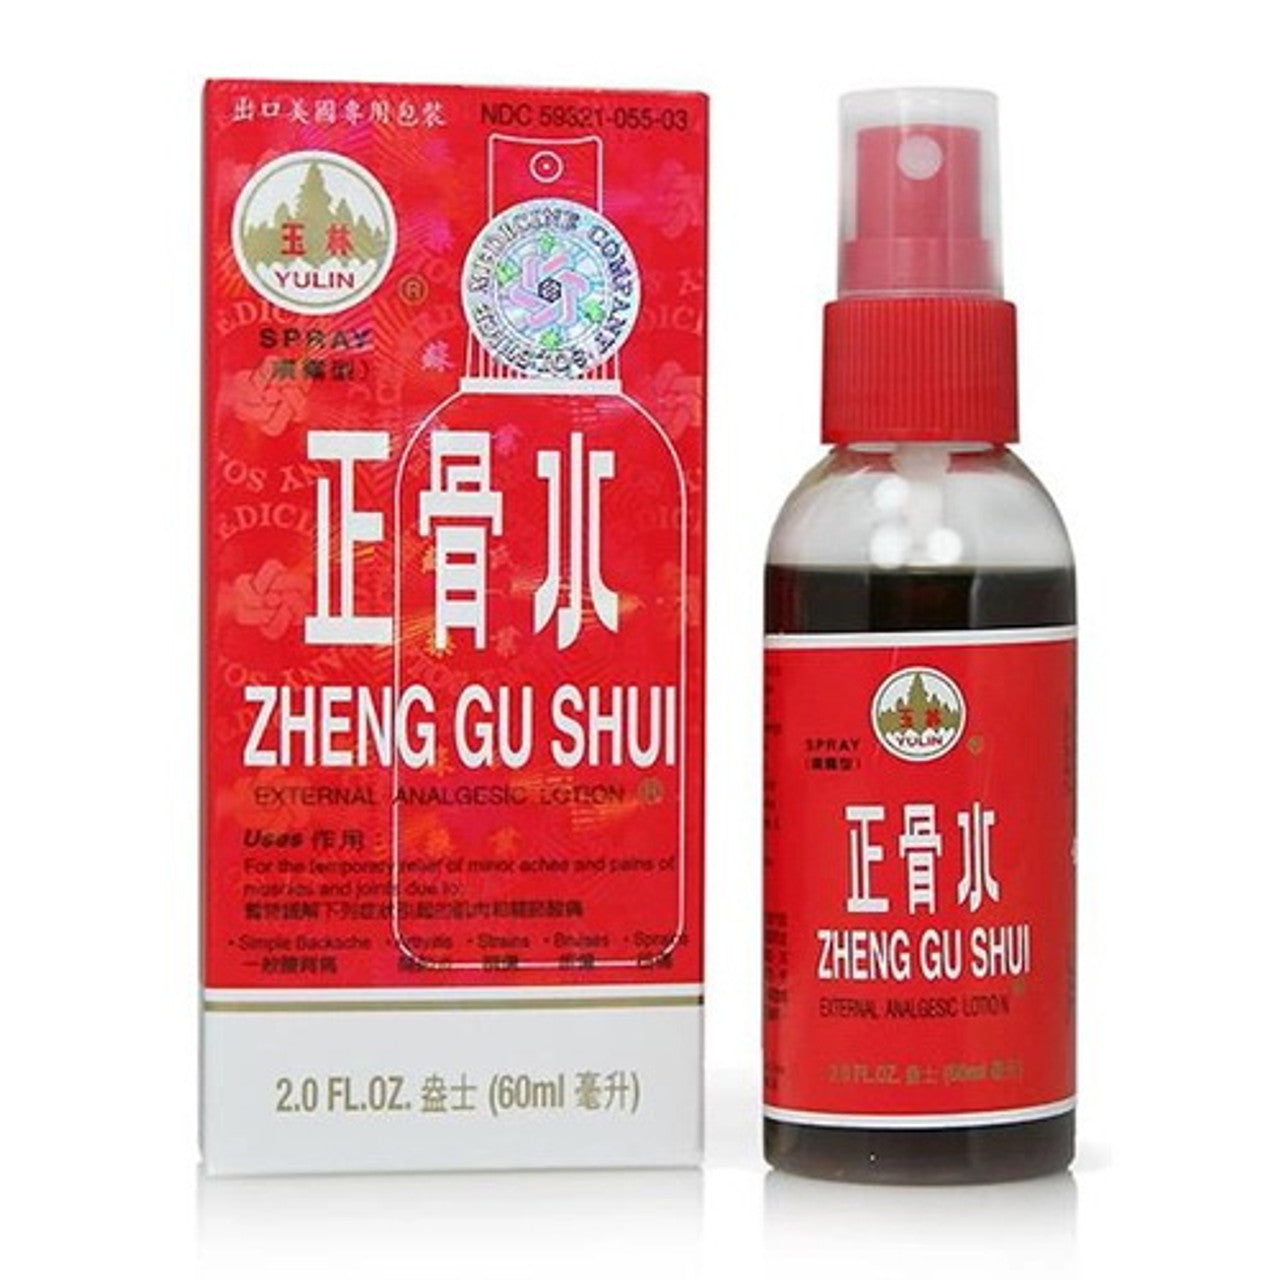 Zheng Gu Shui Spray Topical Pain Relief Herbal Liquid, 2 Oz